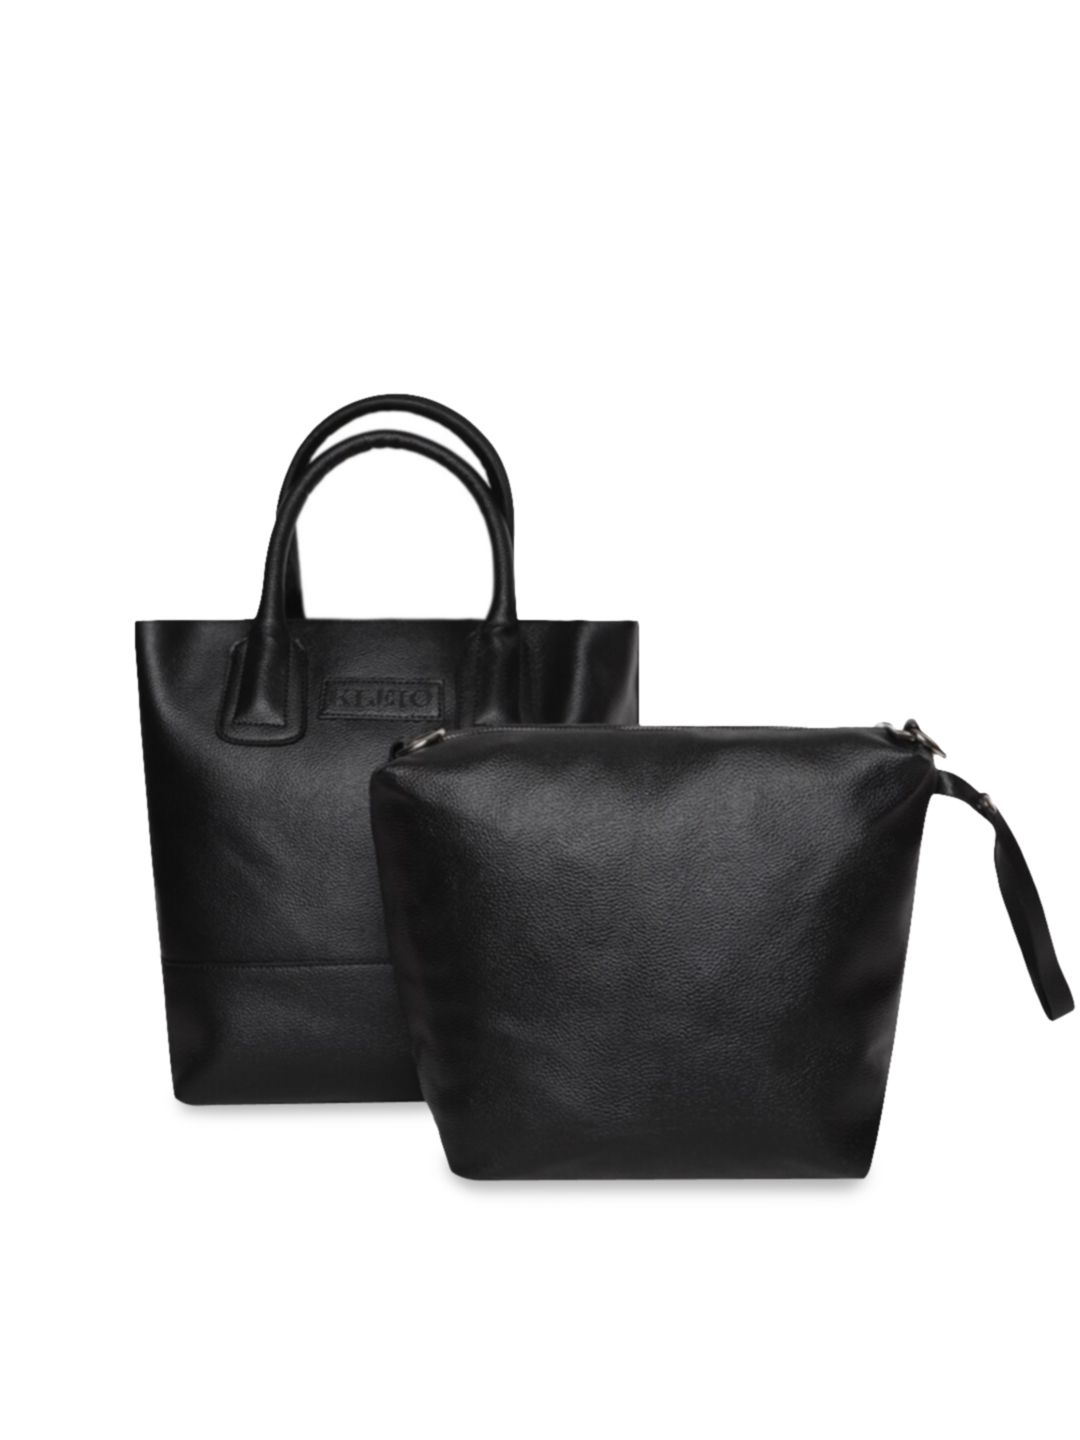 KLEIO Women Set of 2 Black Solid Handbags Price in India